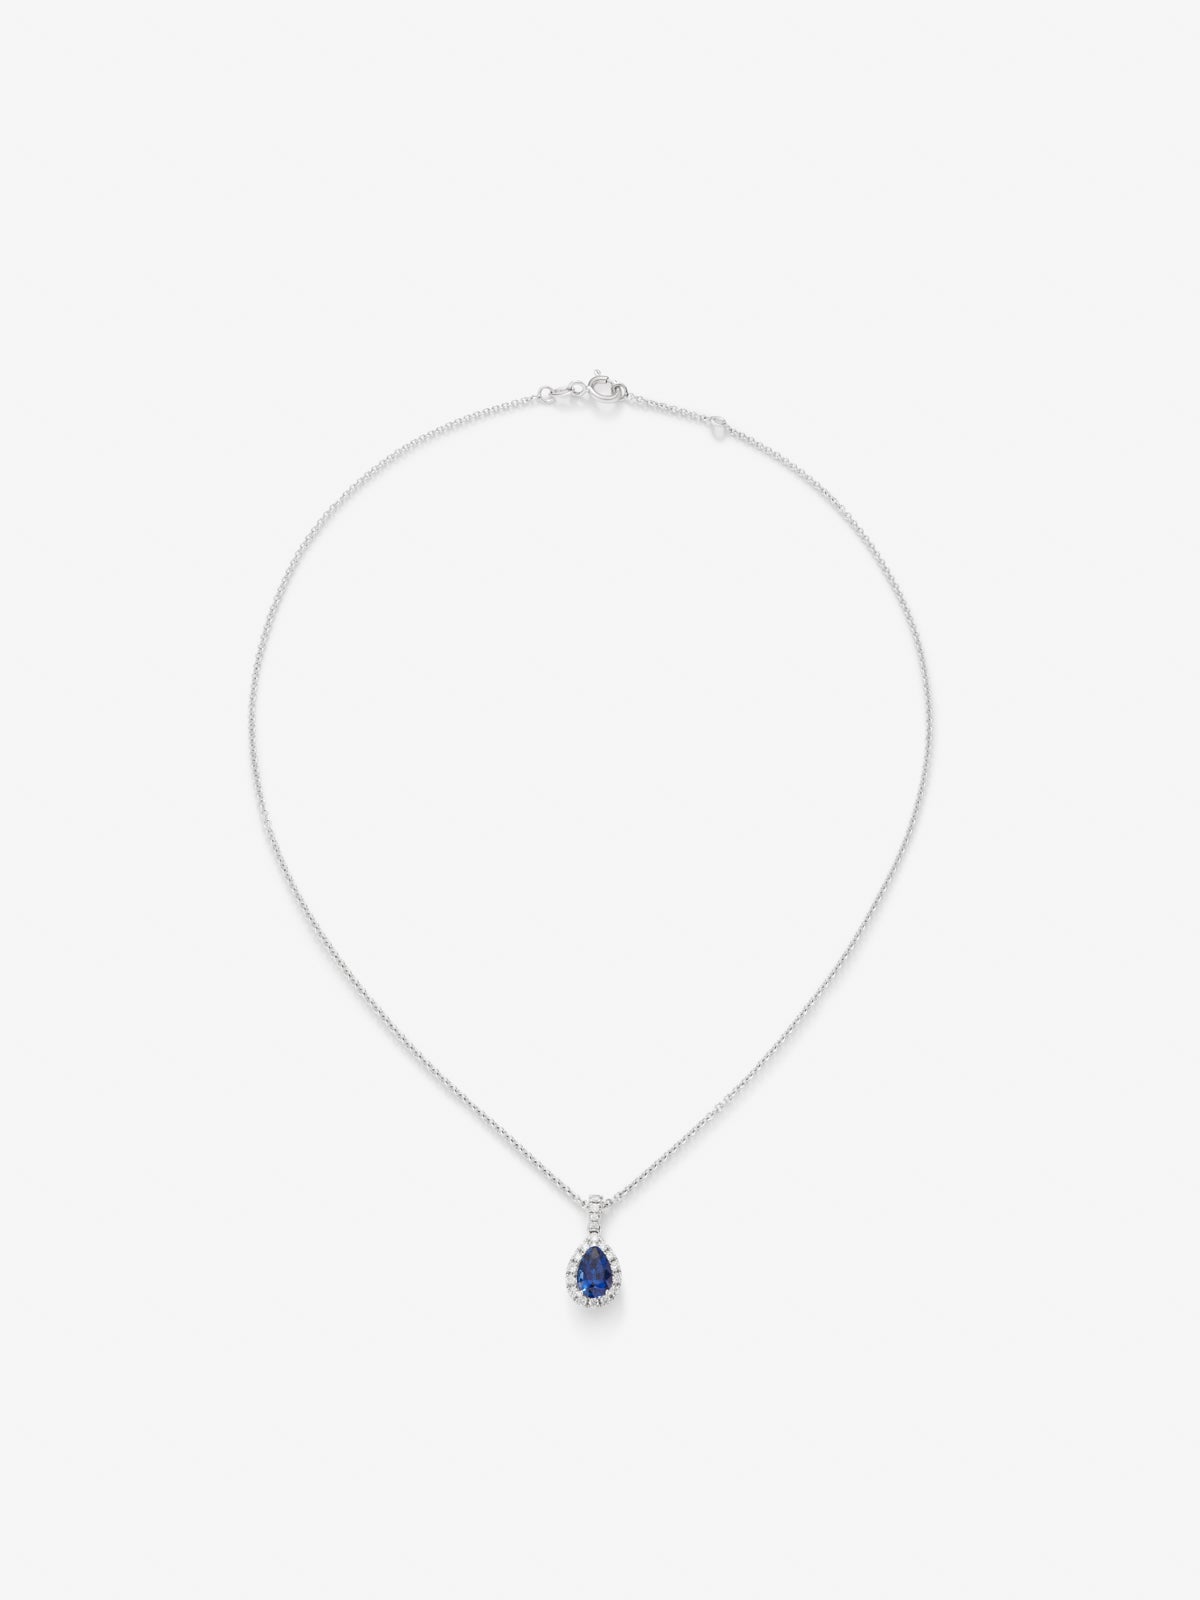 18K white gold pendant with blue sapphir